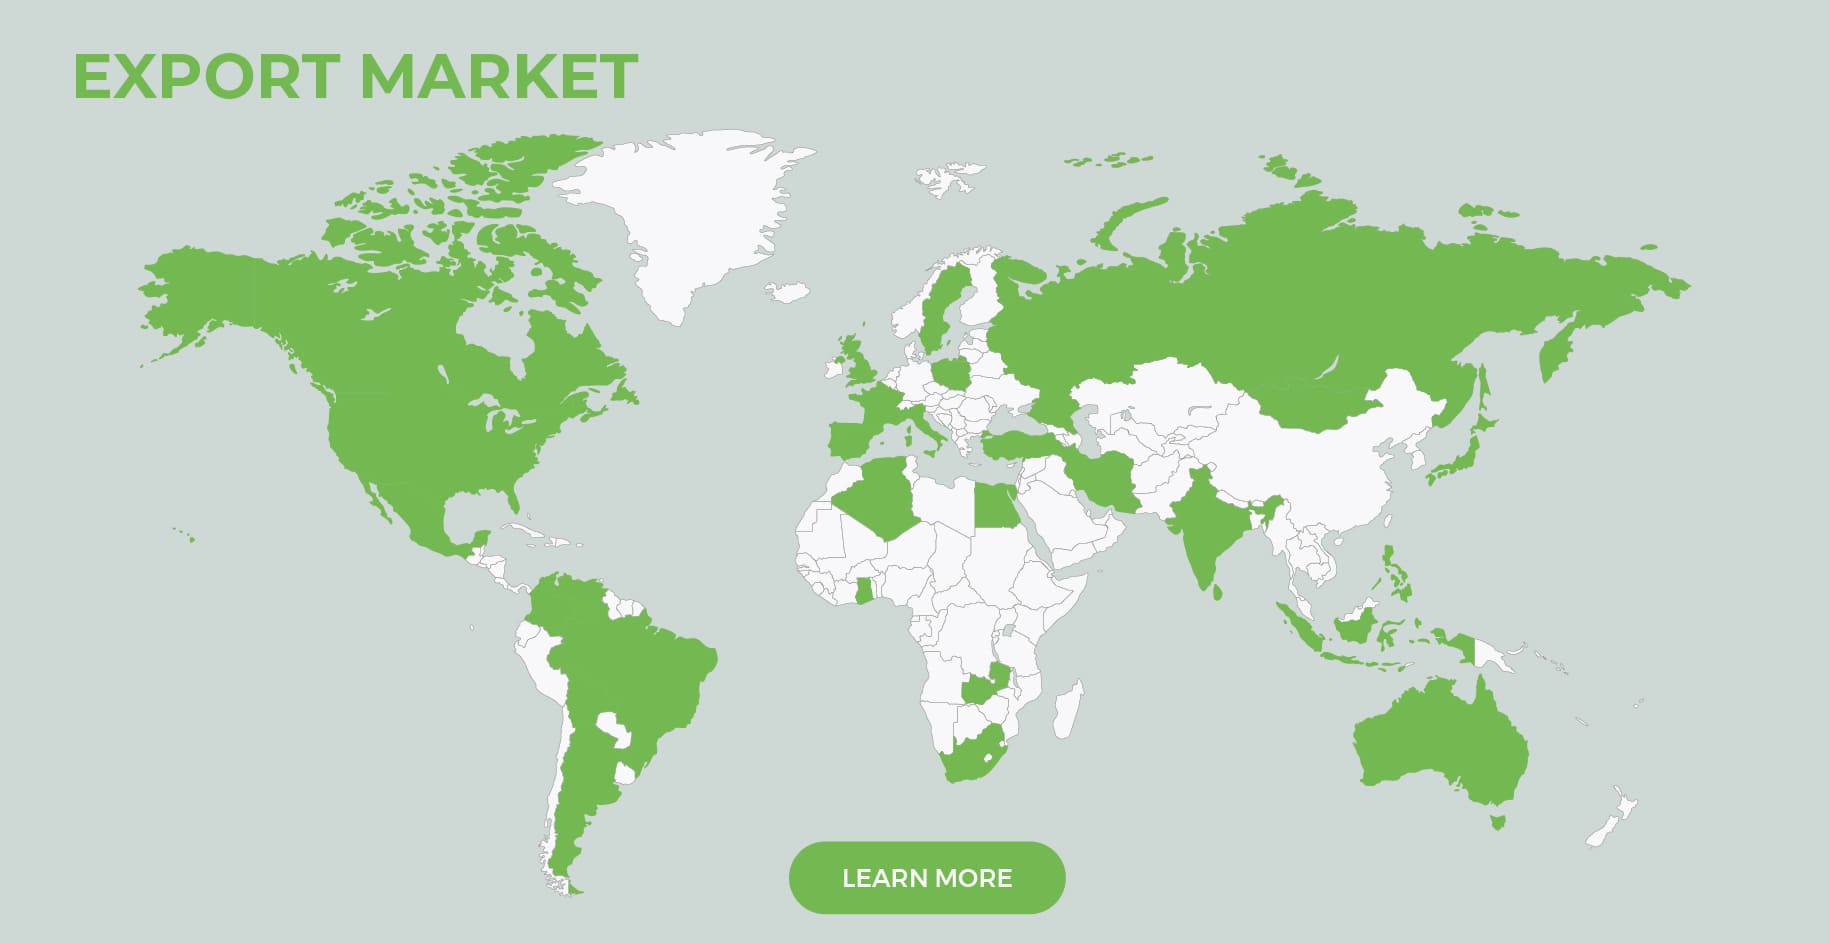 Export market map